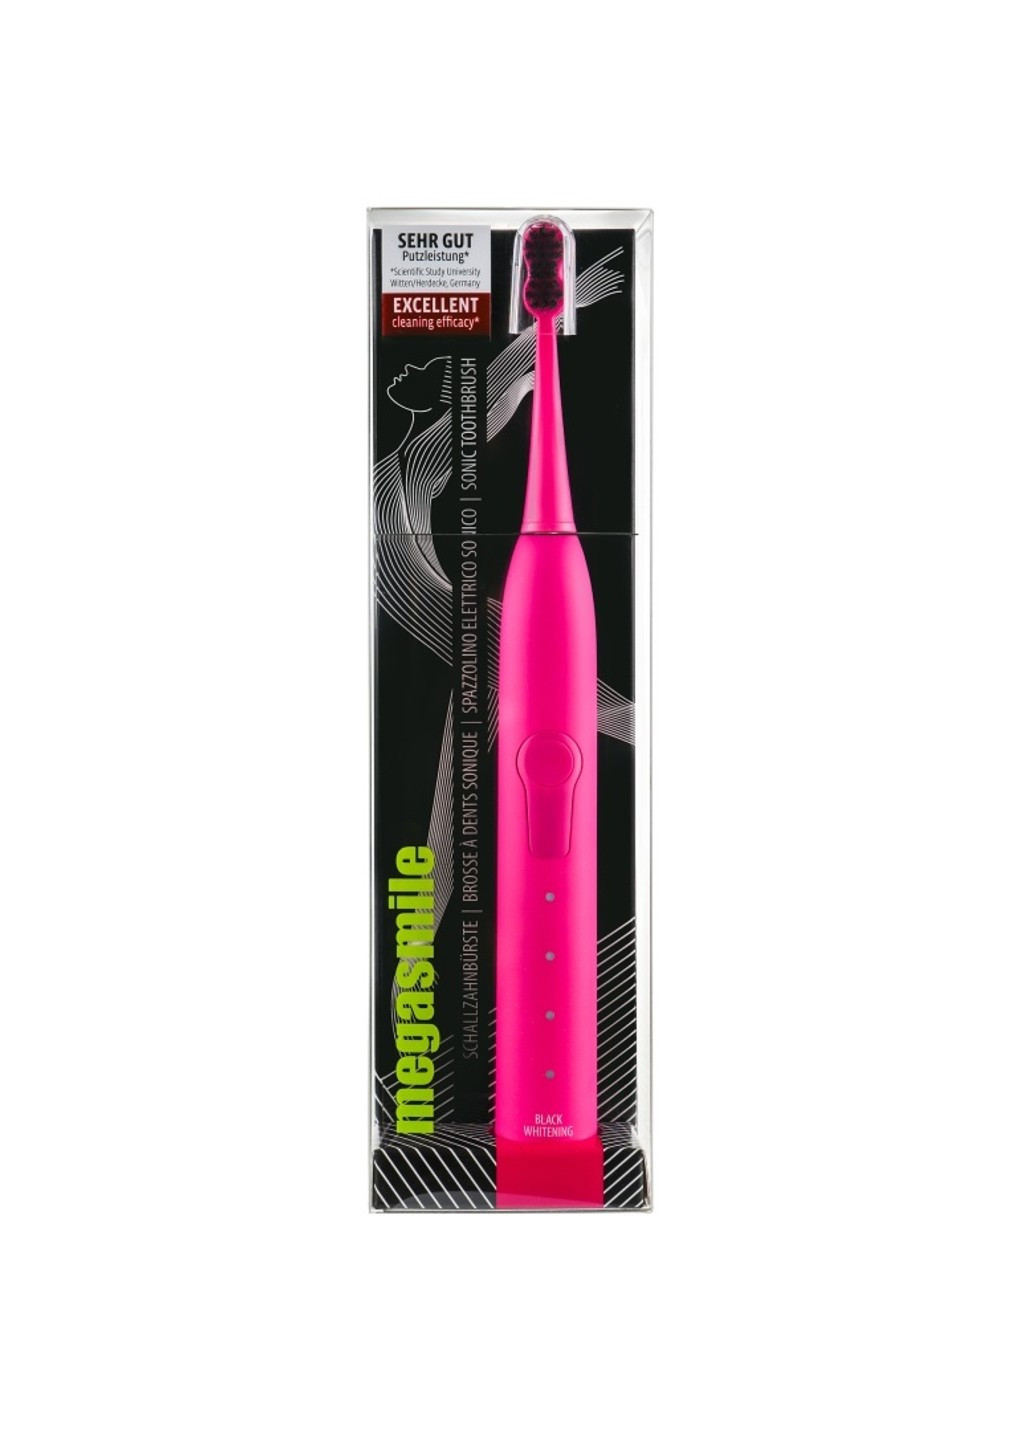 Звуковая гидроактивная зубная щетка Black Whitening II Shocking Pink (розовая) Megasmile (269238129)